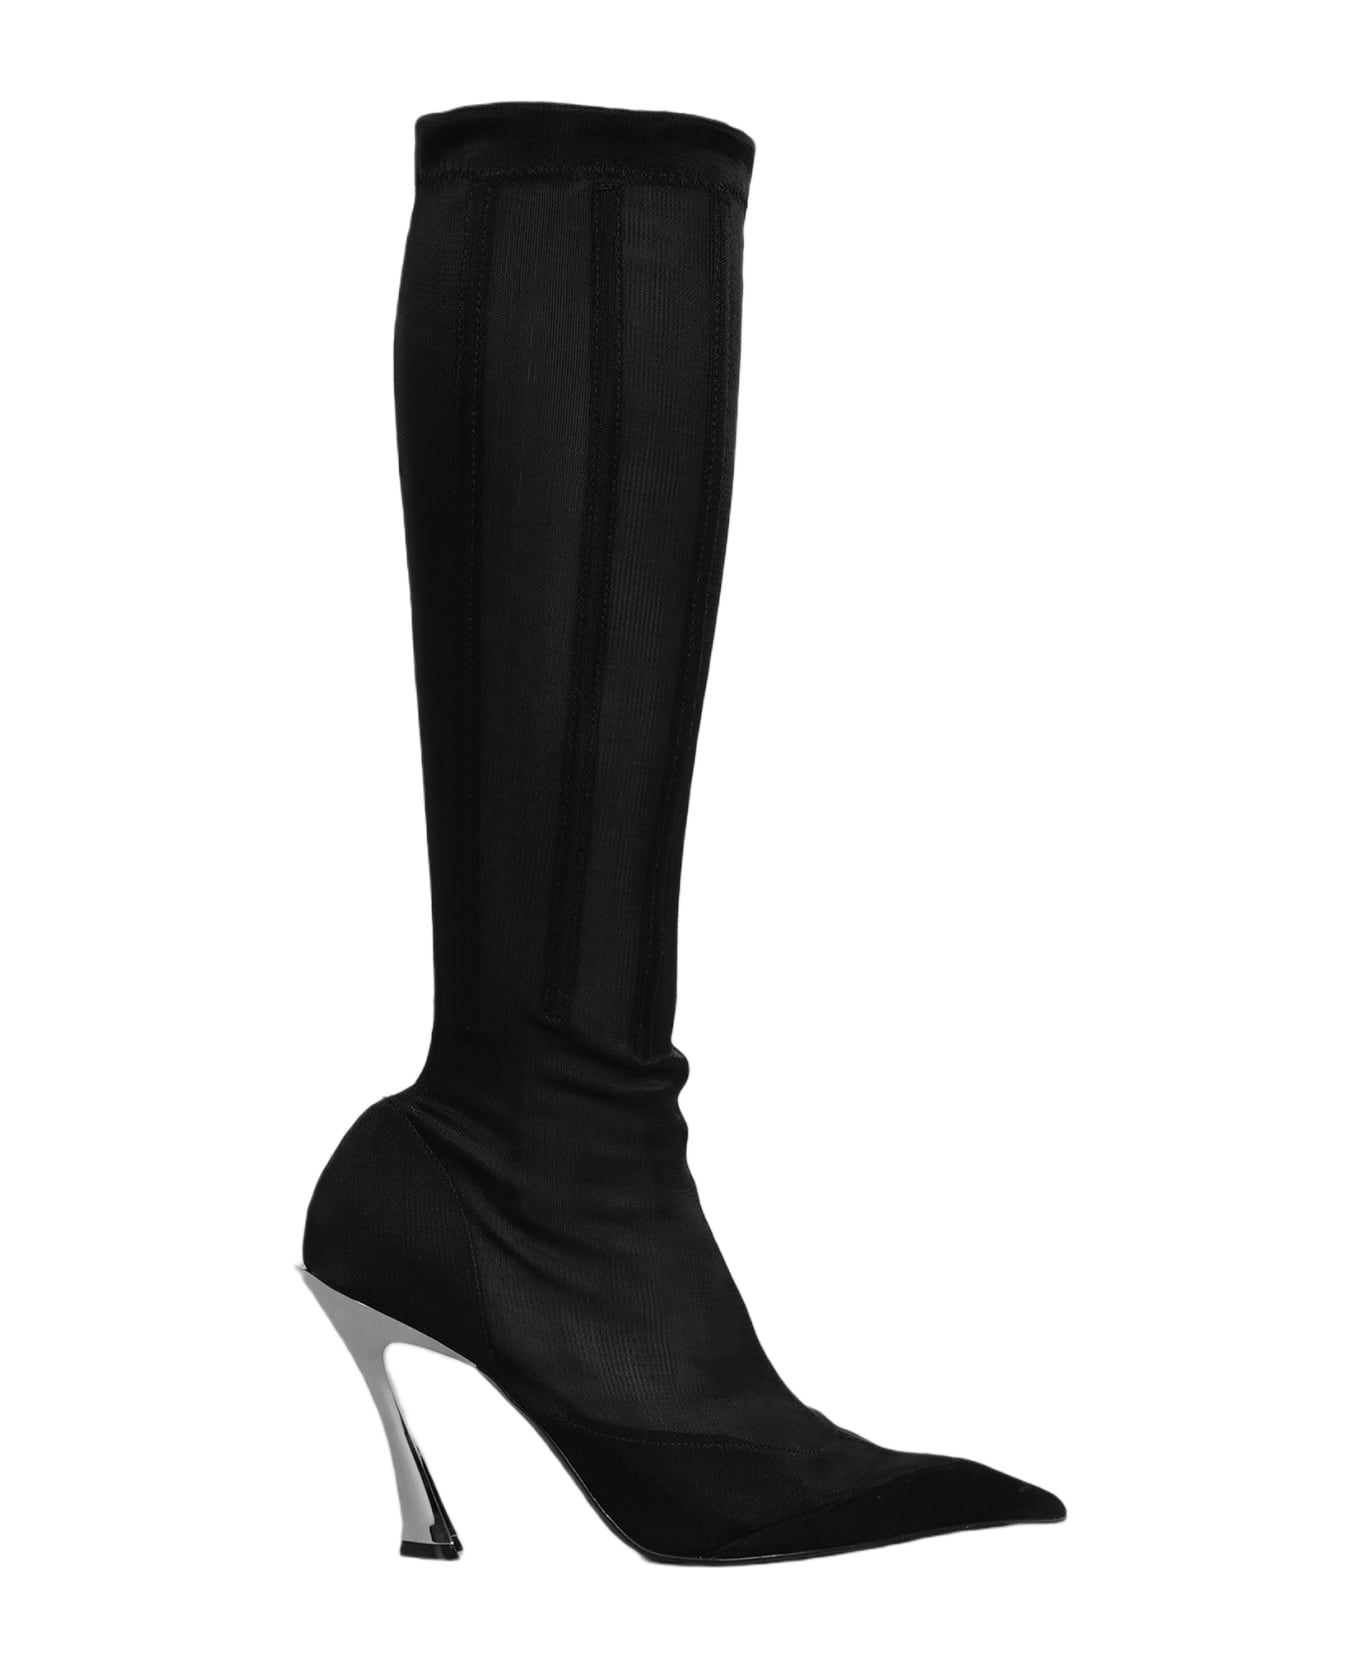 Mugler High Heels Boots In Black Nylon - black